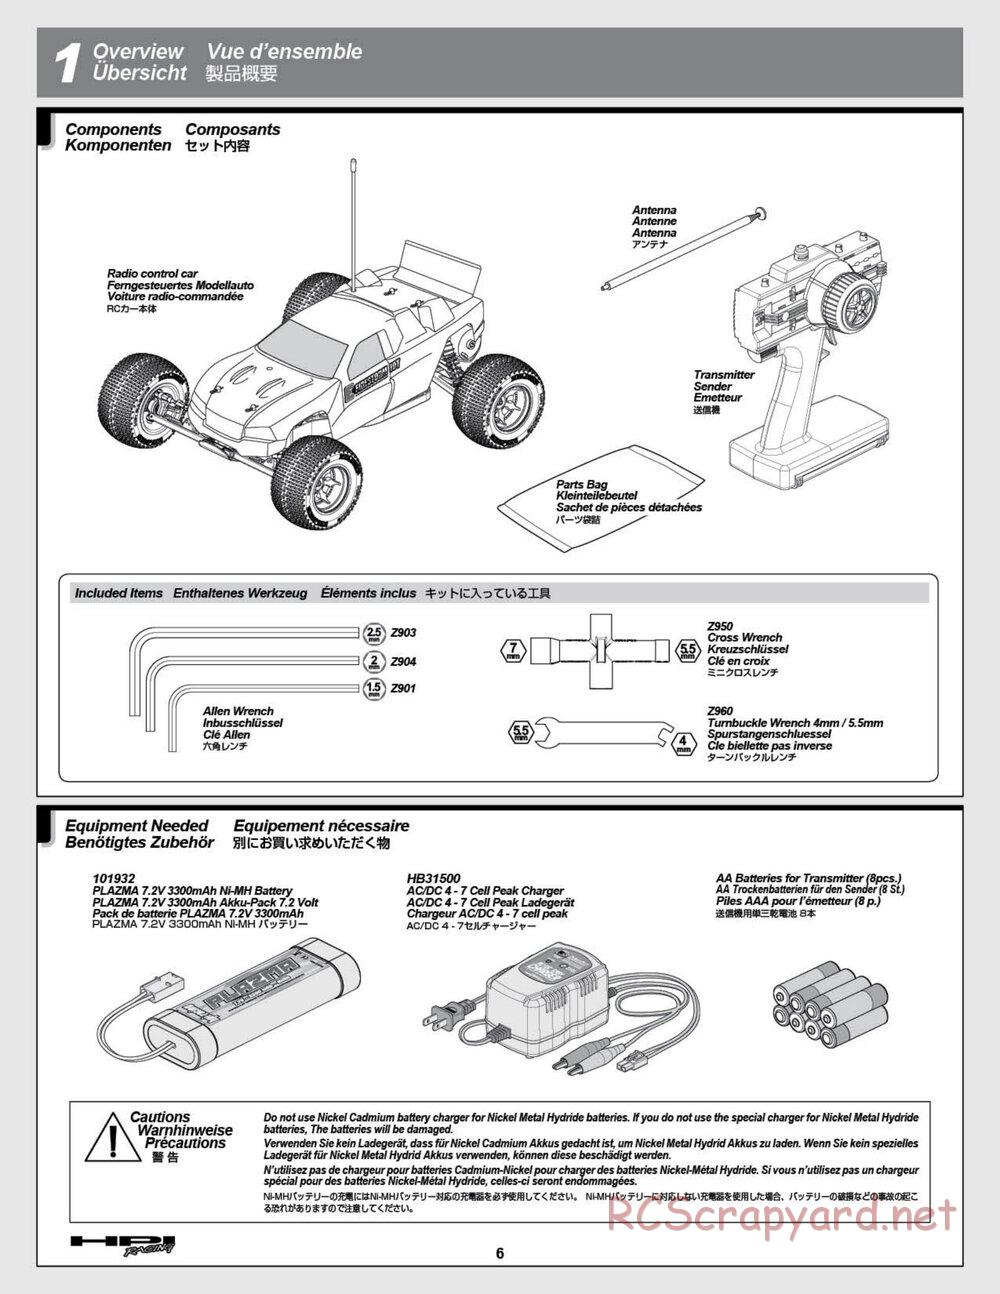 HPI - E-Firestorm 10 HT - Manual - Page 6